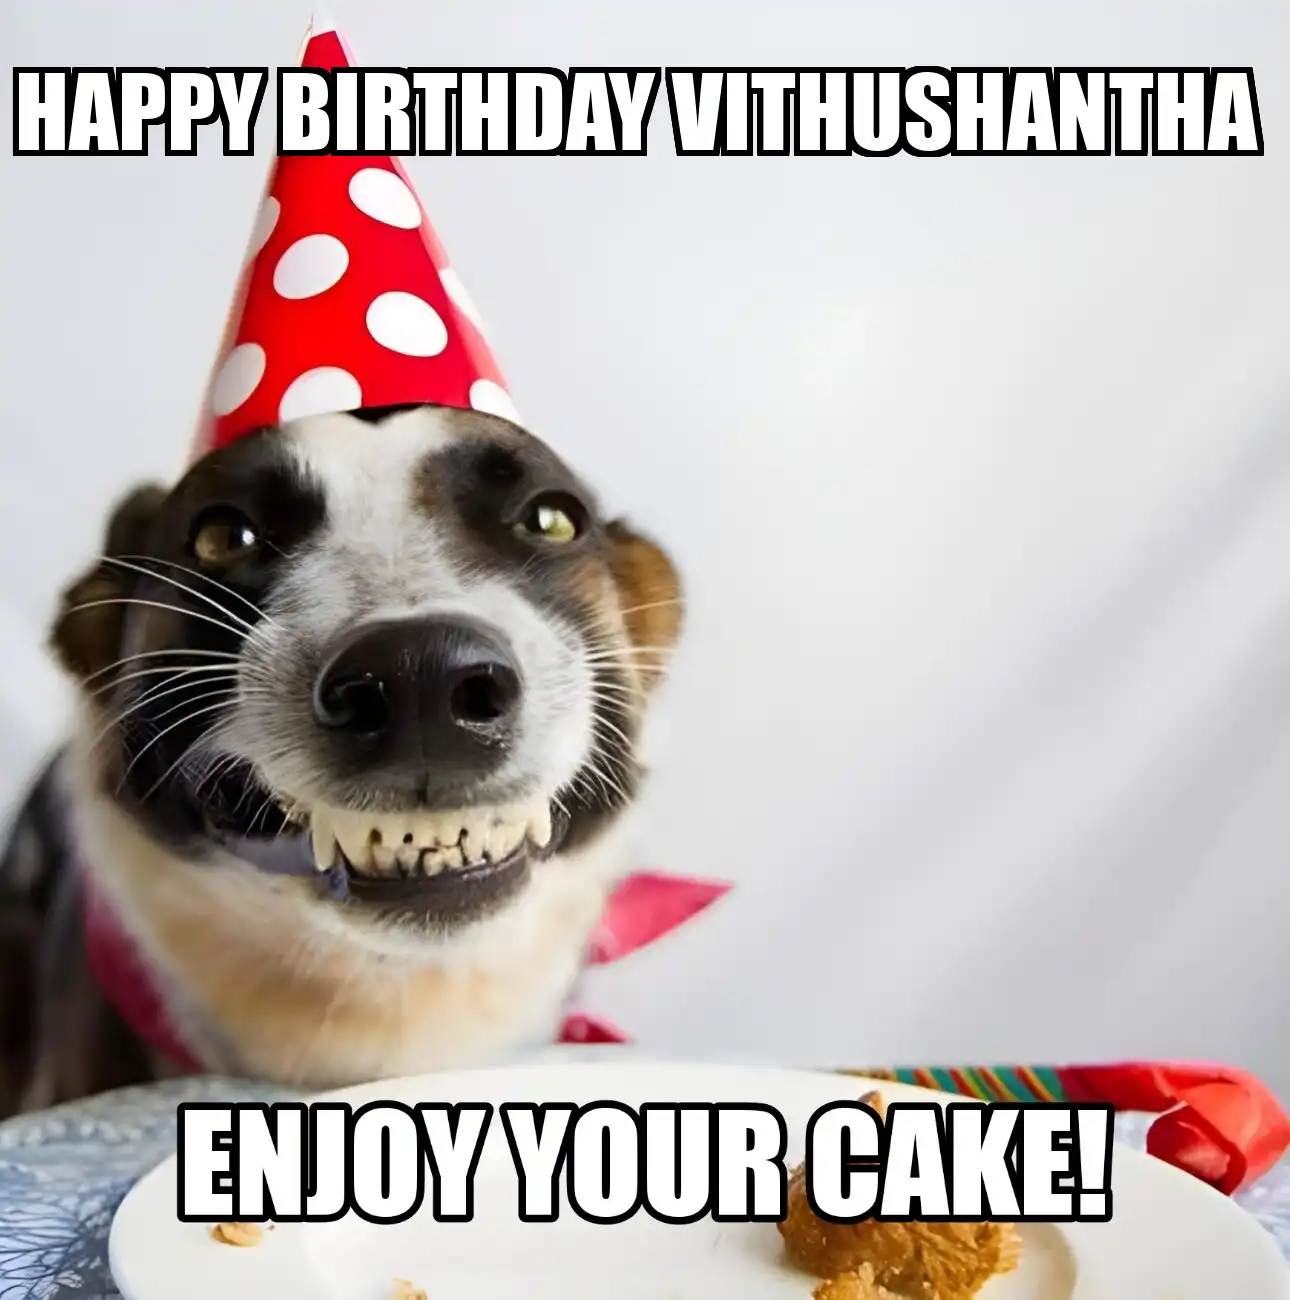 Happy Birthday Vithushantha Enjoy Your Cake Dog Meme